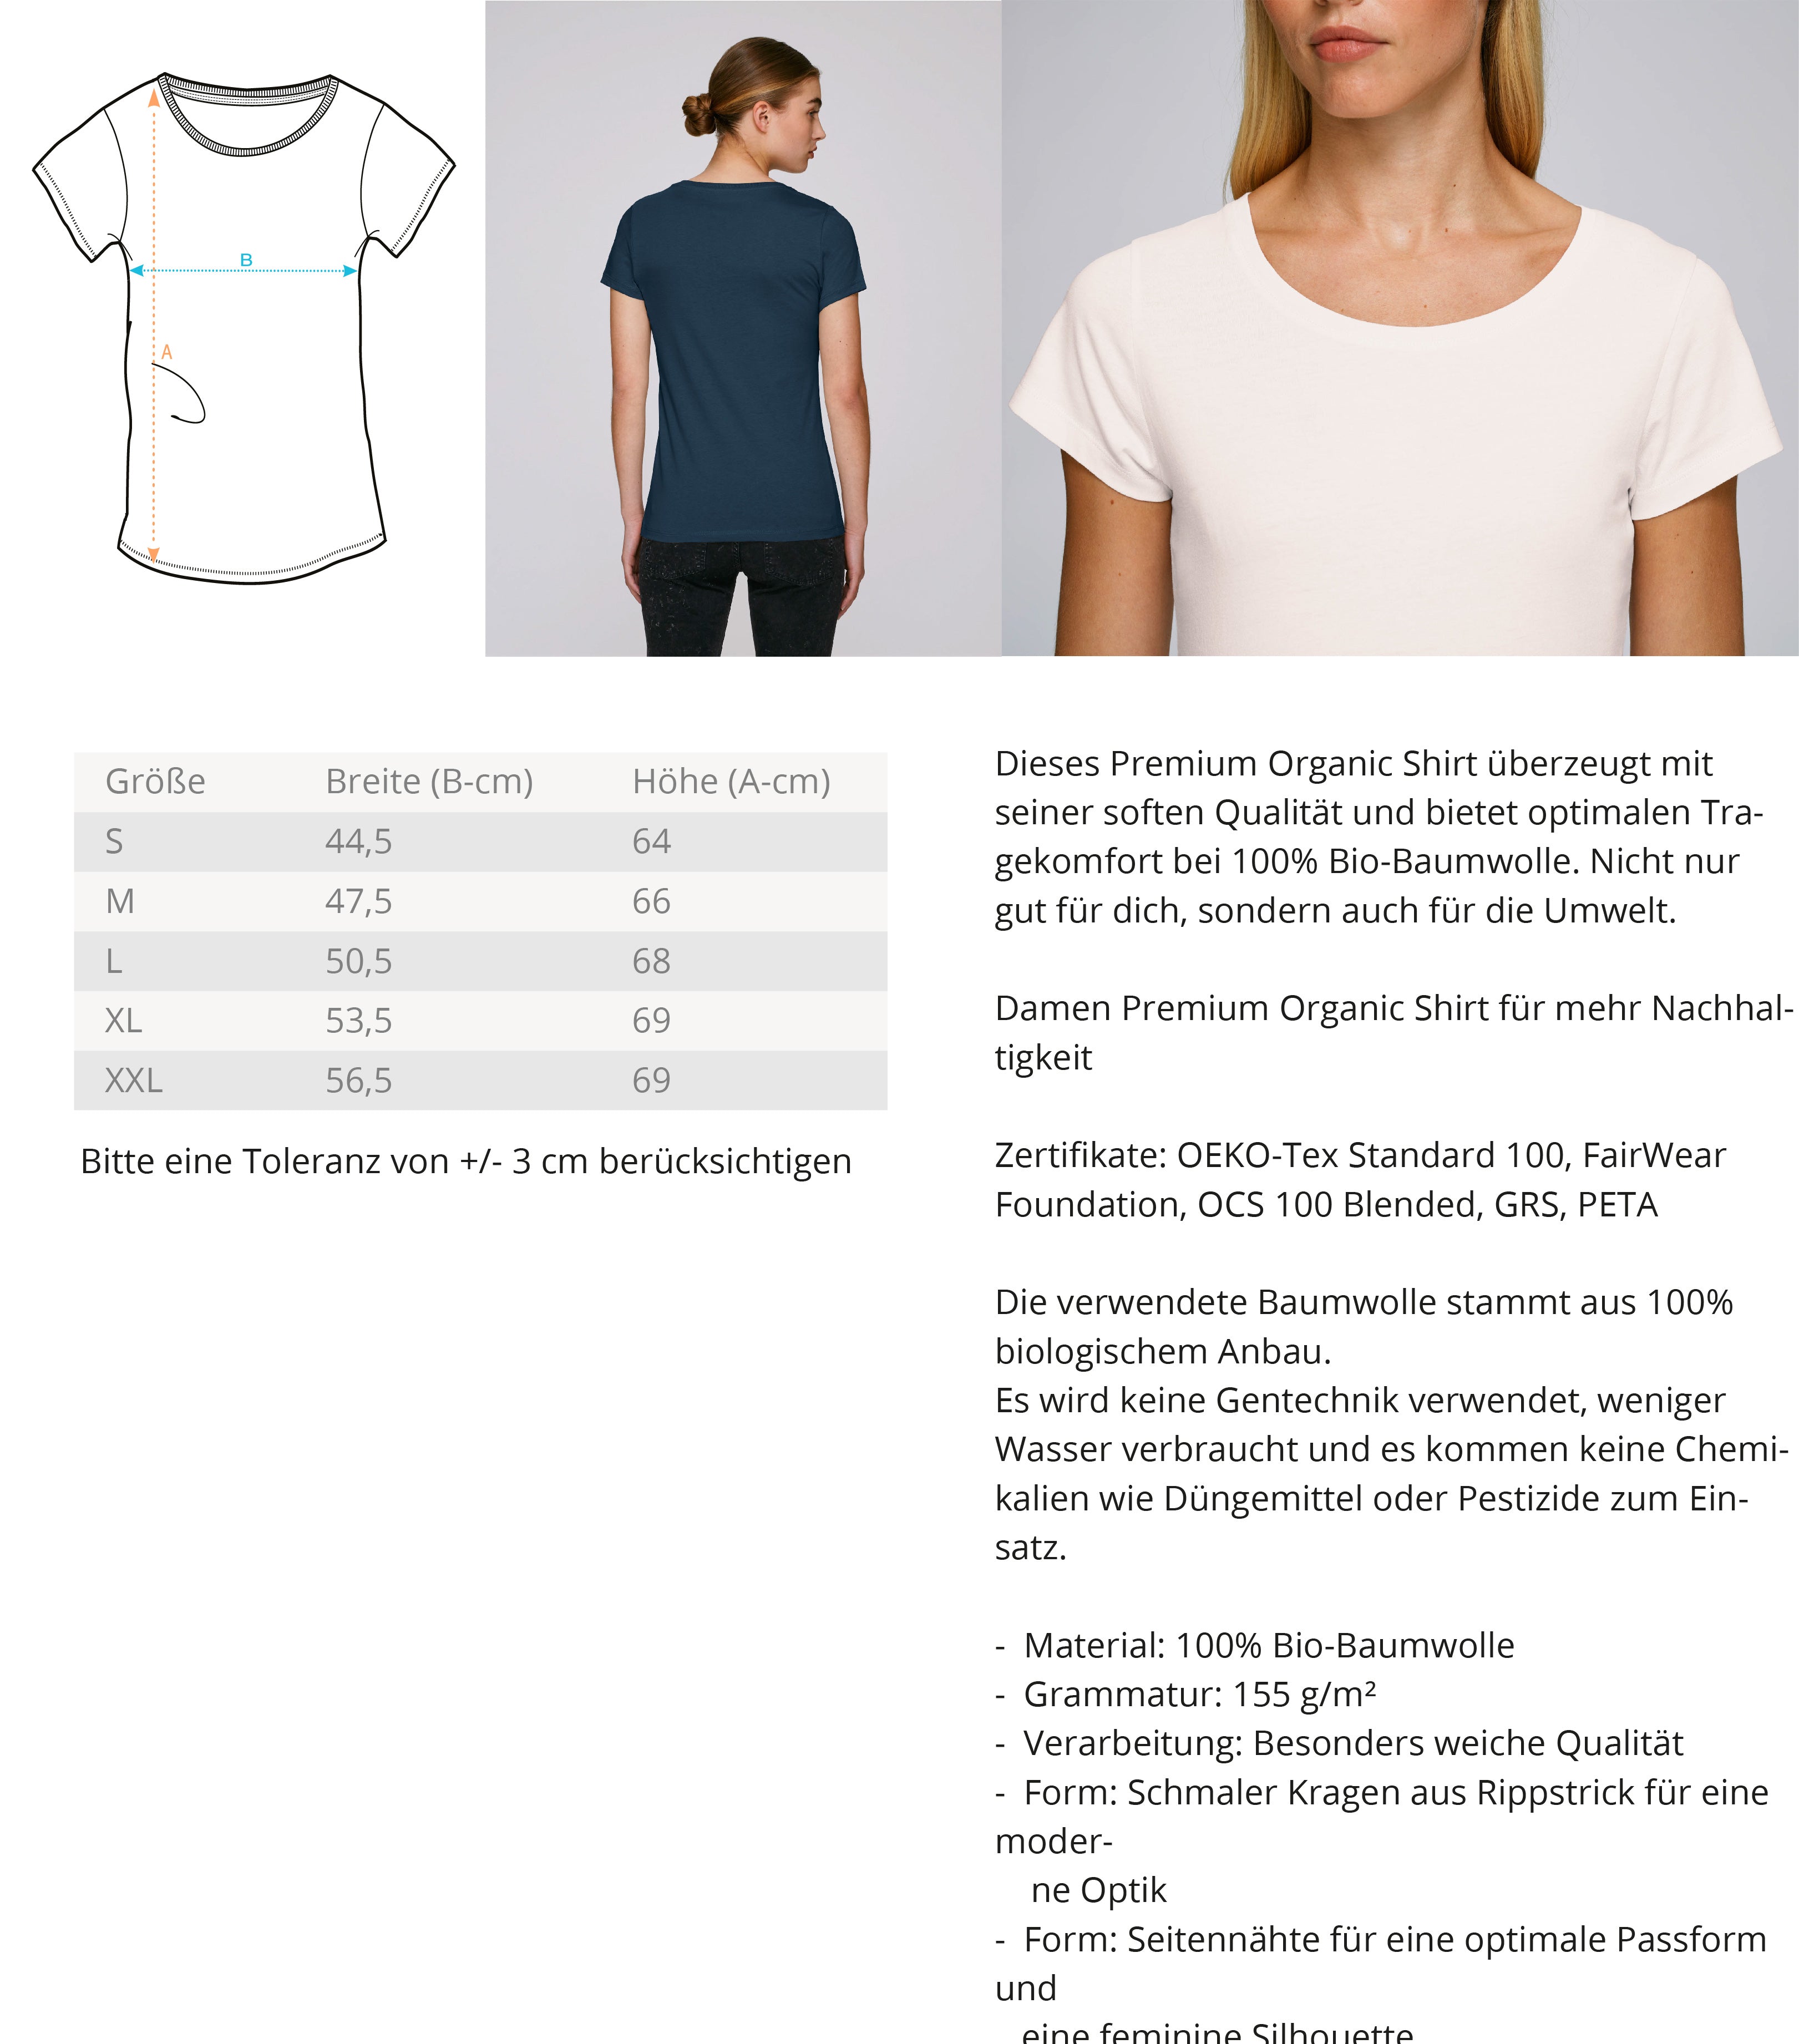 Mutterliebe  - Damen Premium Organic Shirt